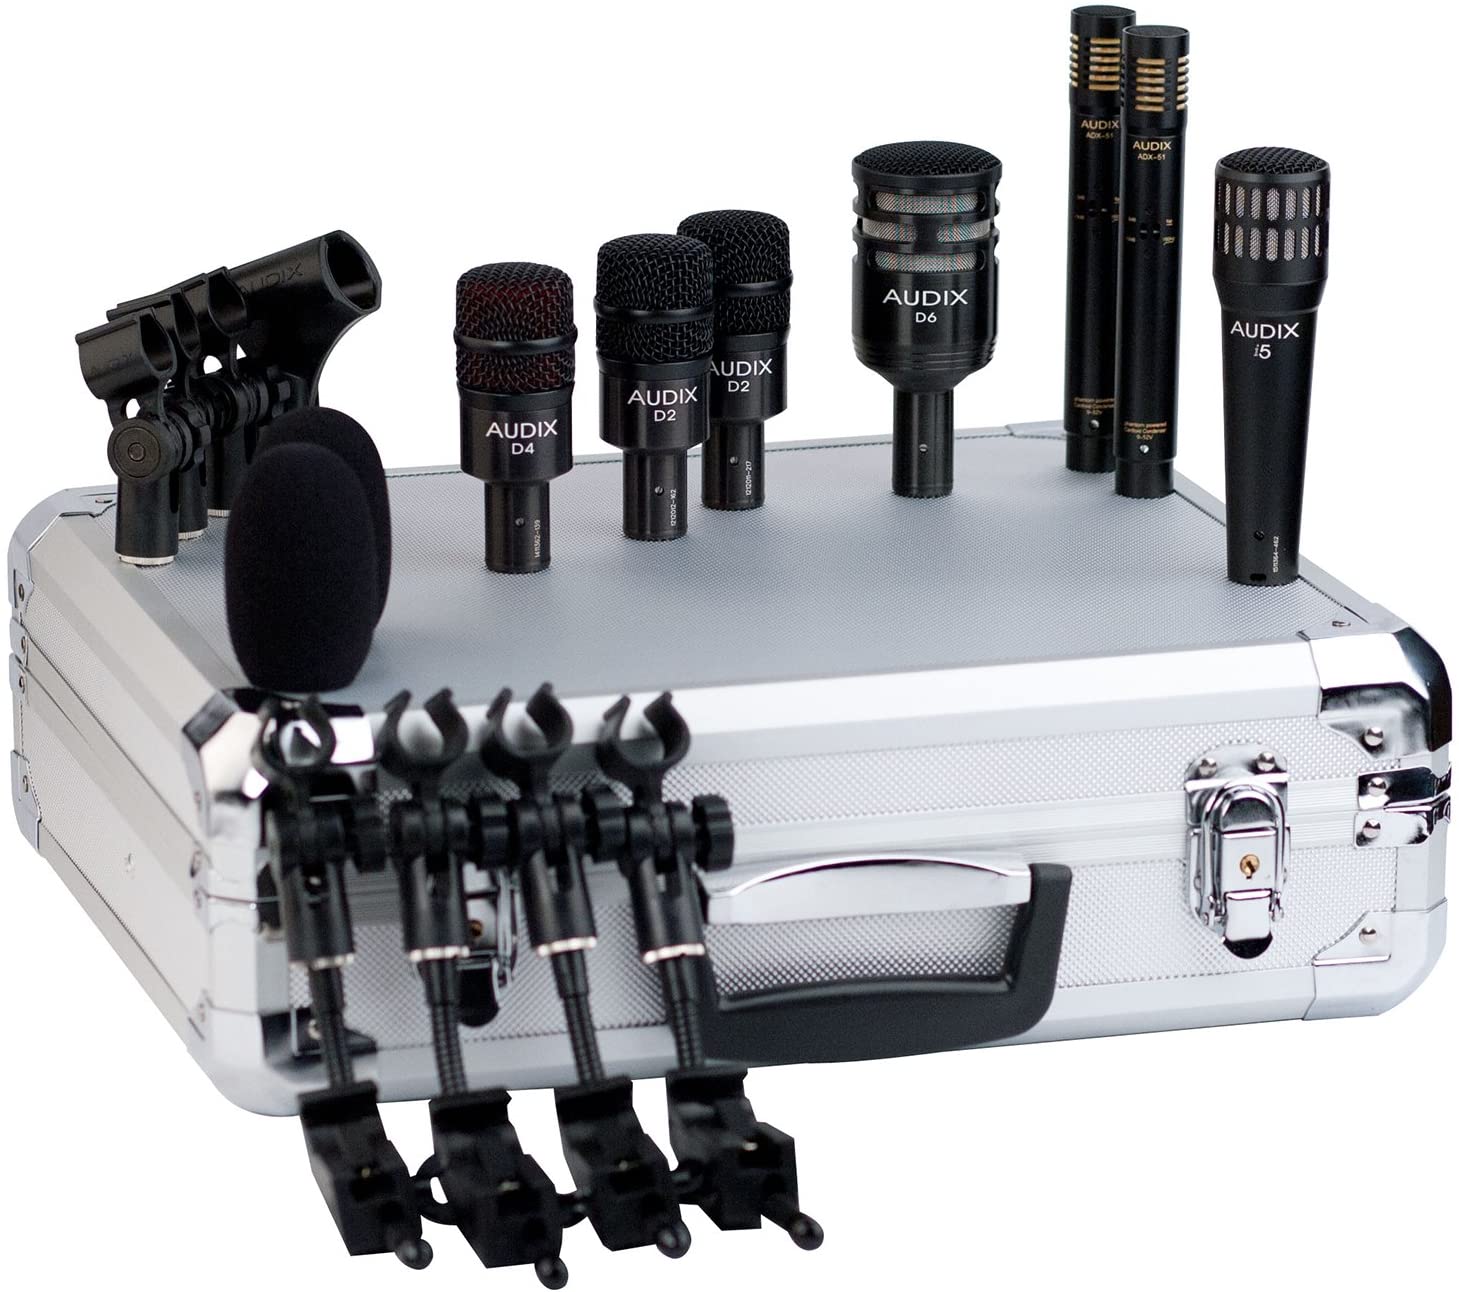 AUDIX D6 ダイナミックマイク - 配信機器・PA機器・レコーディング機器